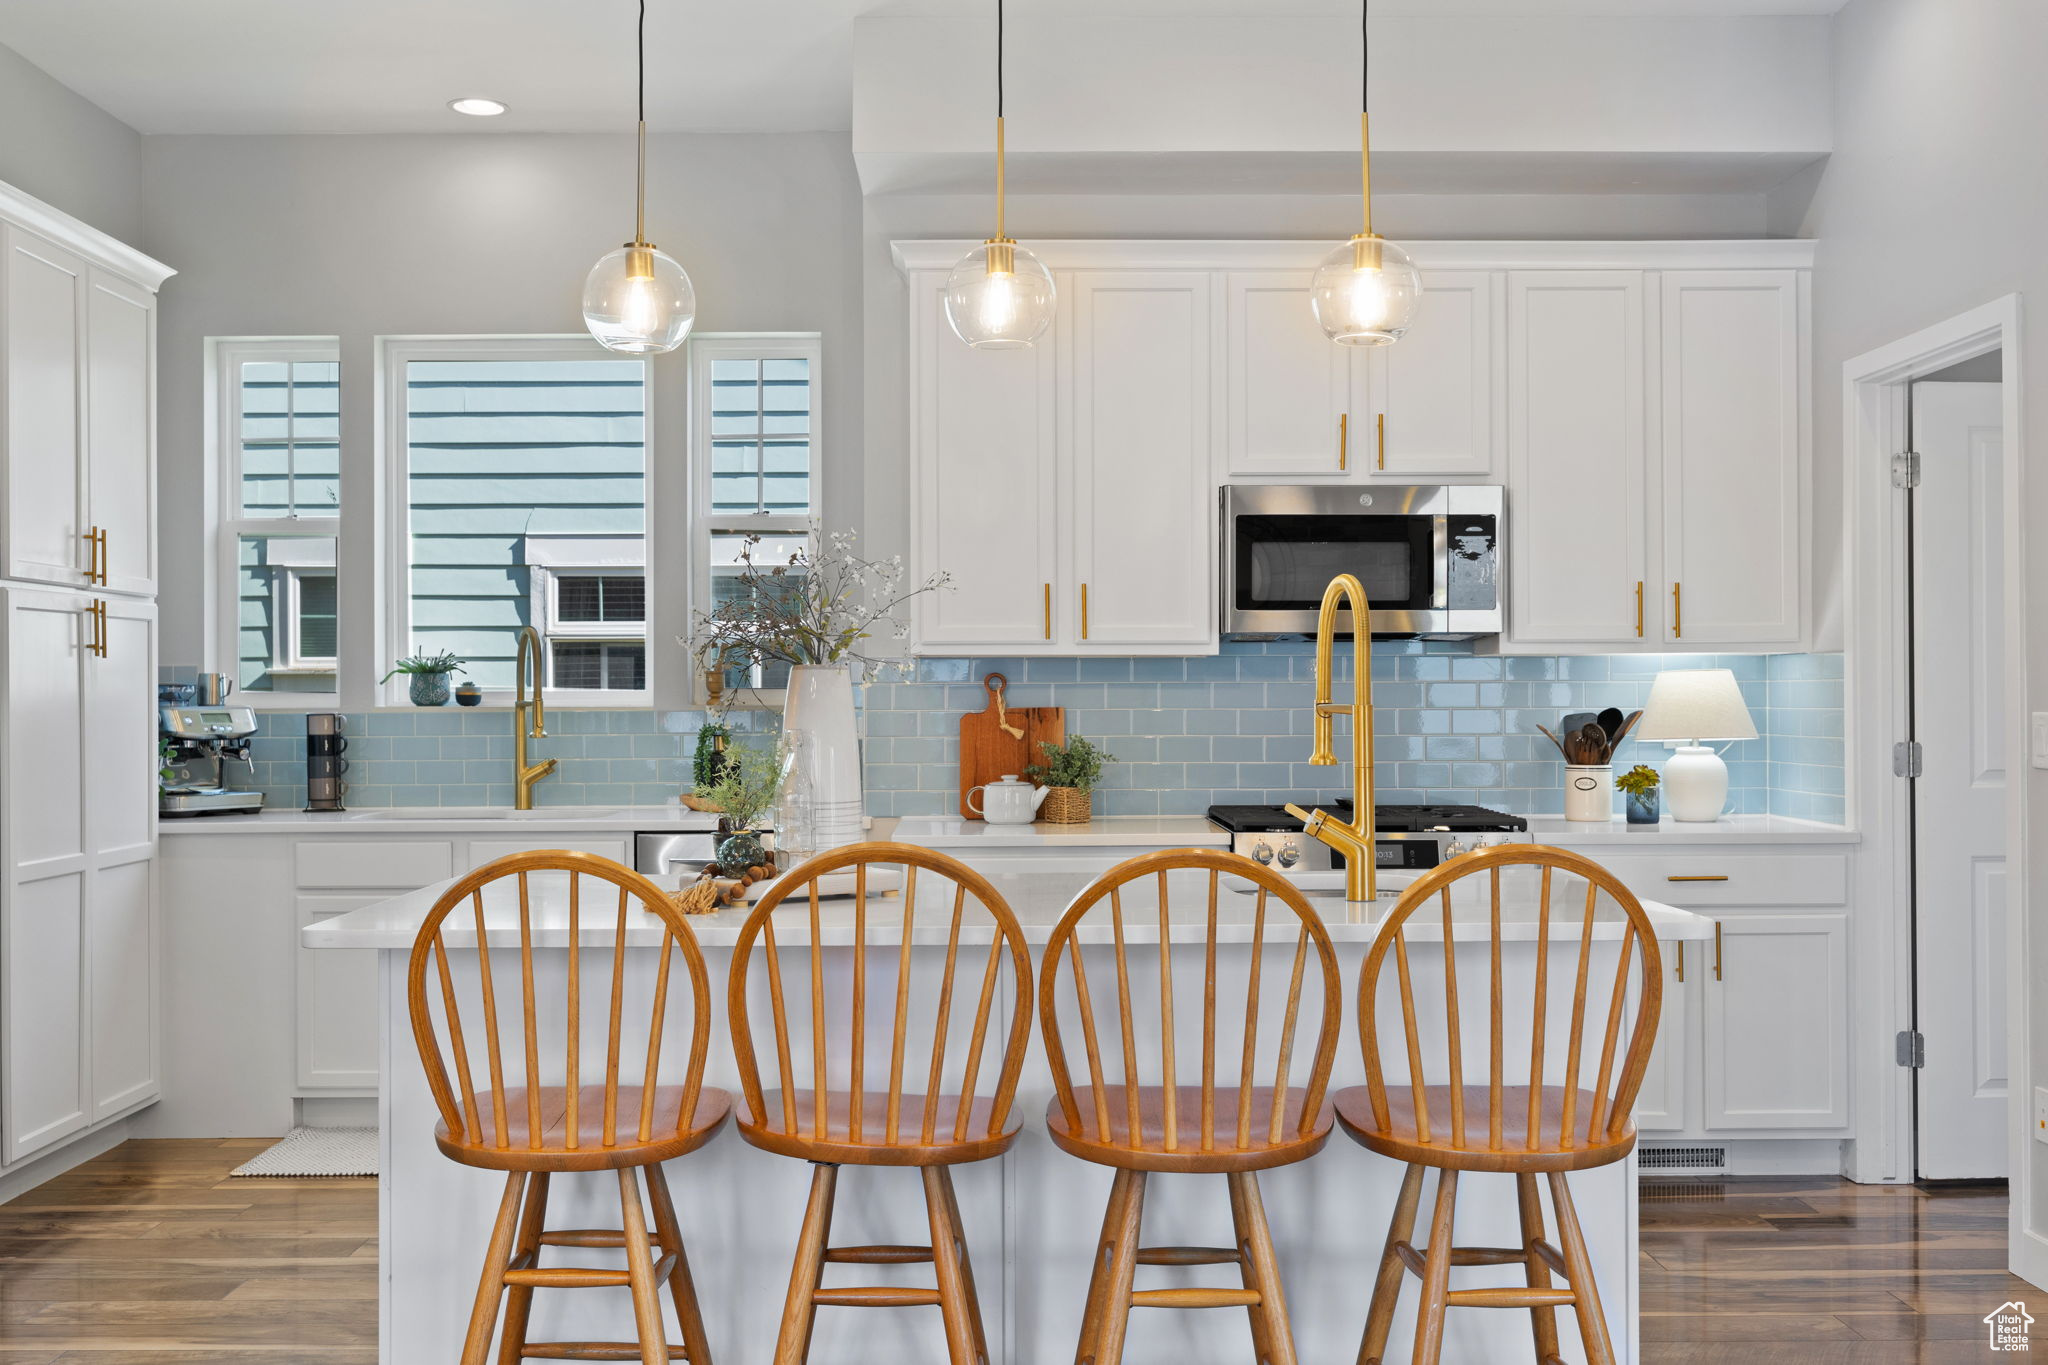 Kitchen featuring backsplash, hardwood / wood-style flooring, white cabinets, and hanging light fixtures